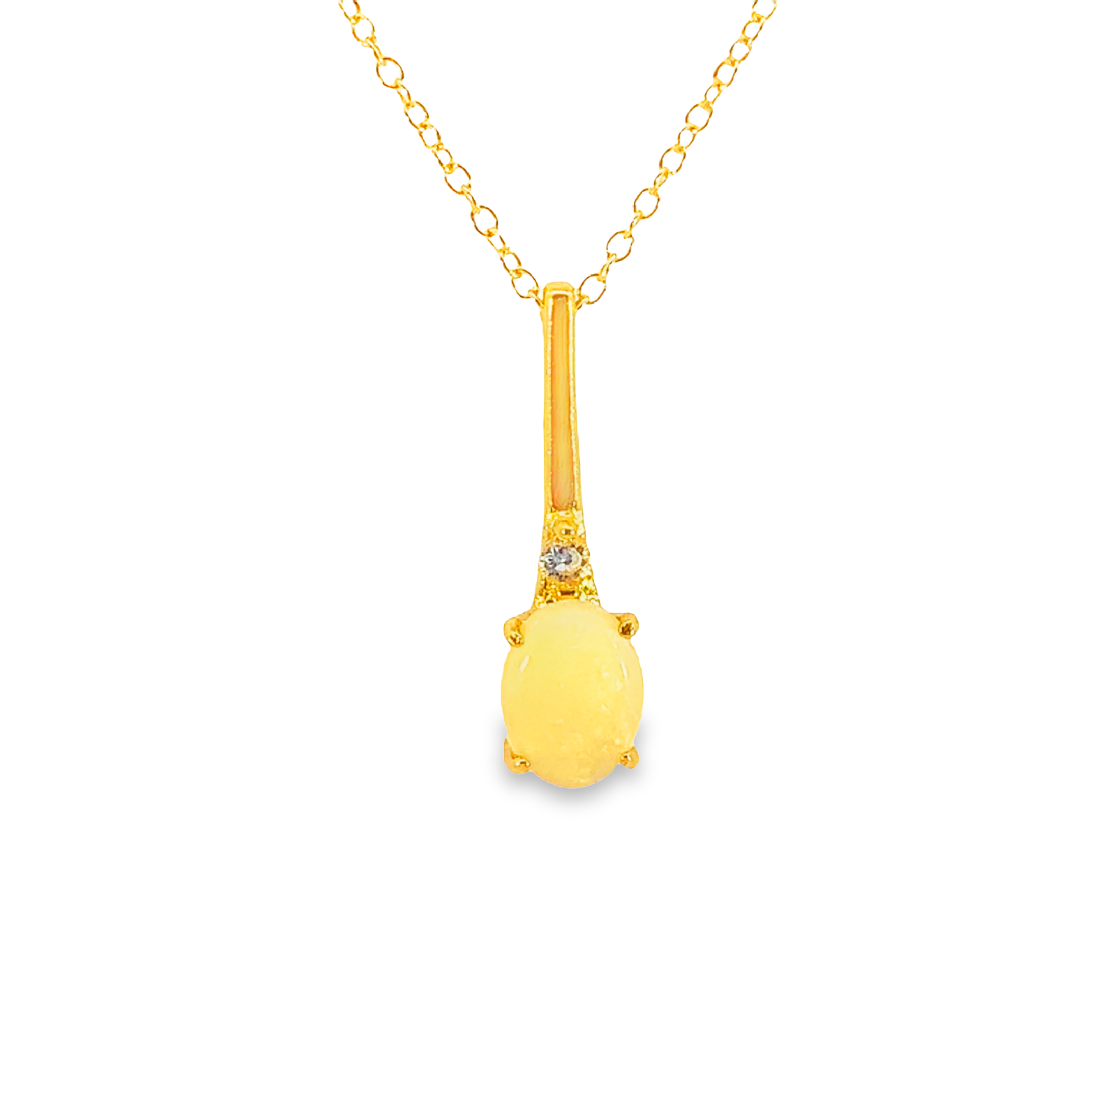 Gold plated drop style 8x6mm White Opal pendant - Masterpiece Jewellery Opal & Gems Sydney Australia | Online Shop